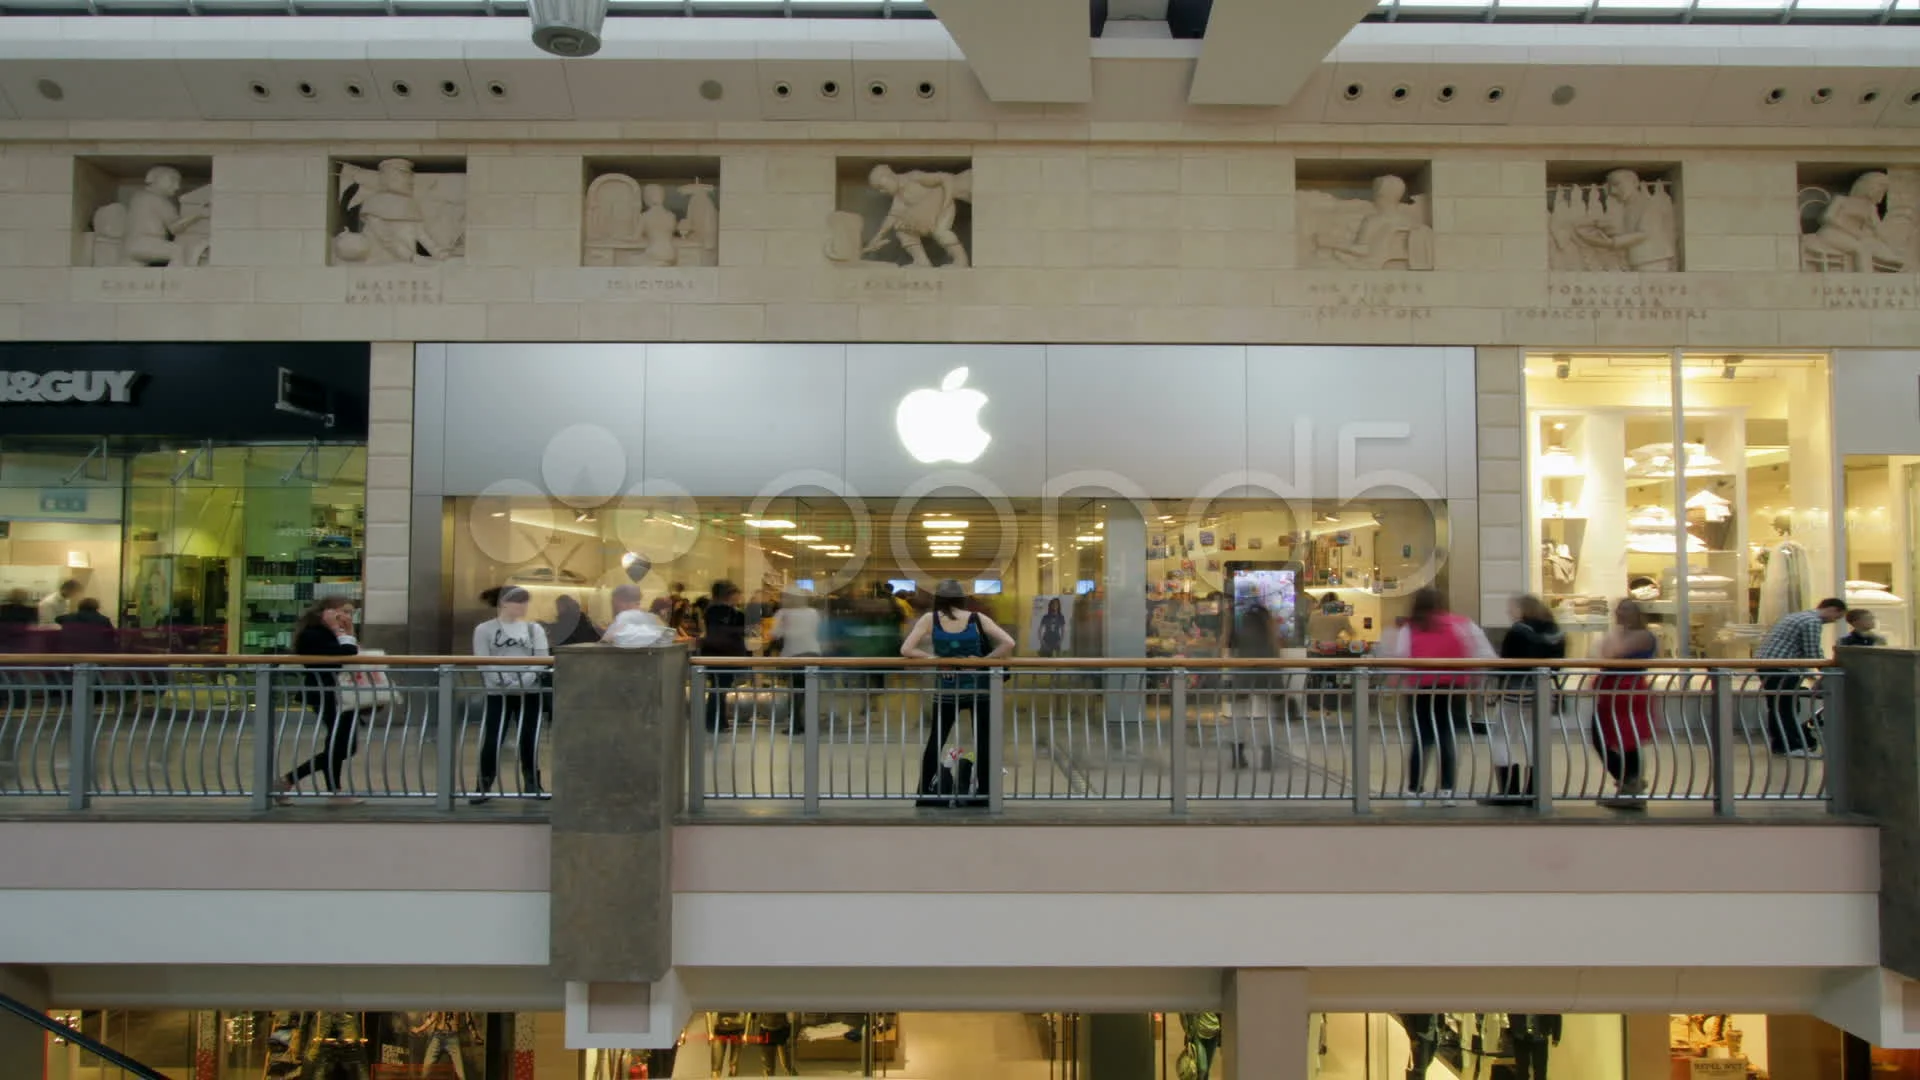 Boise Towne Square - Apple Store - Apple